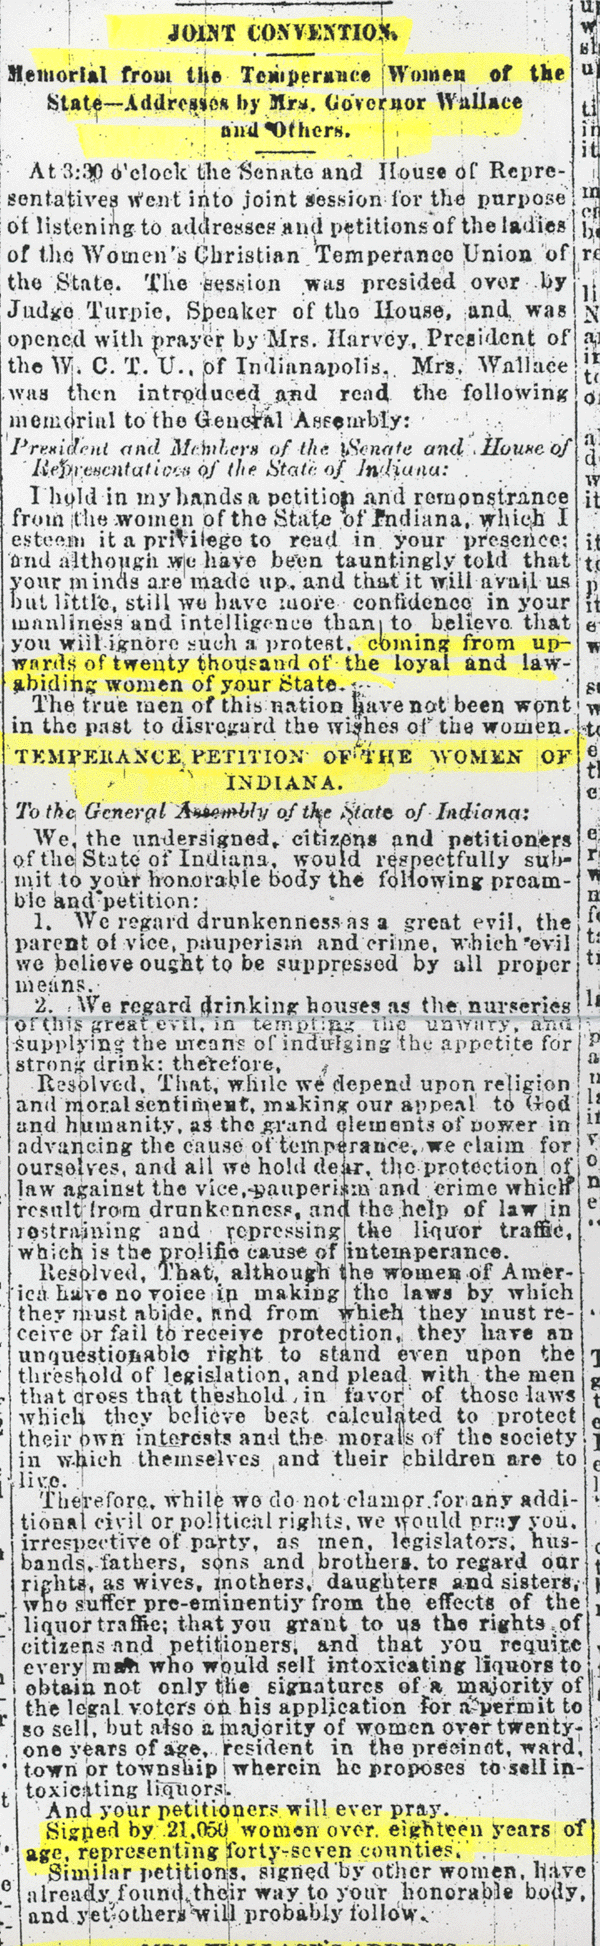 Indianapolis Journal, January 22, 1875.